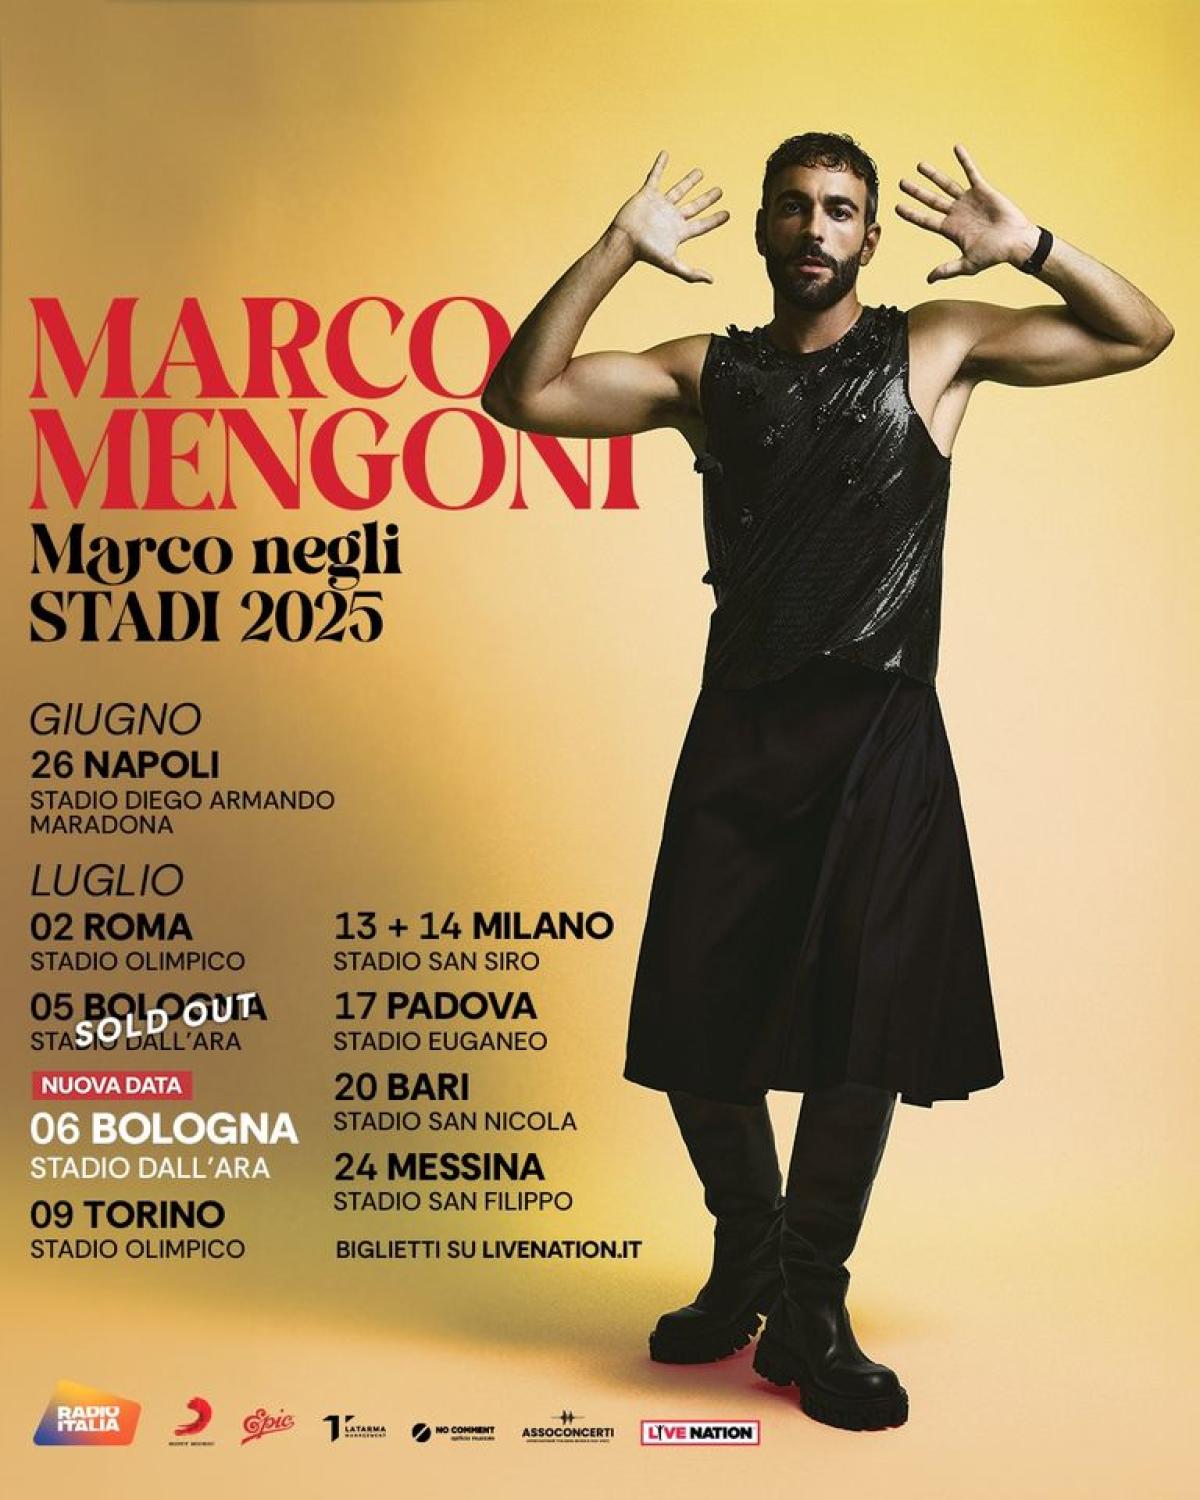 Marco Mengoni en Stadio Dall'ara Tickets